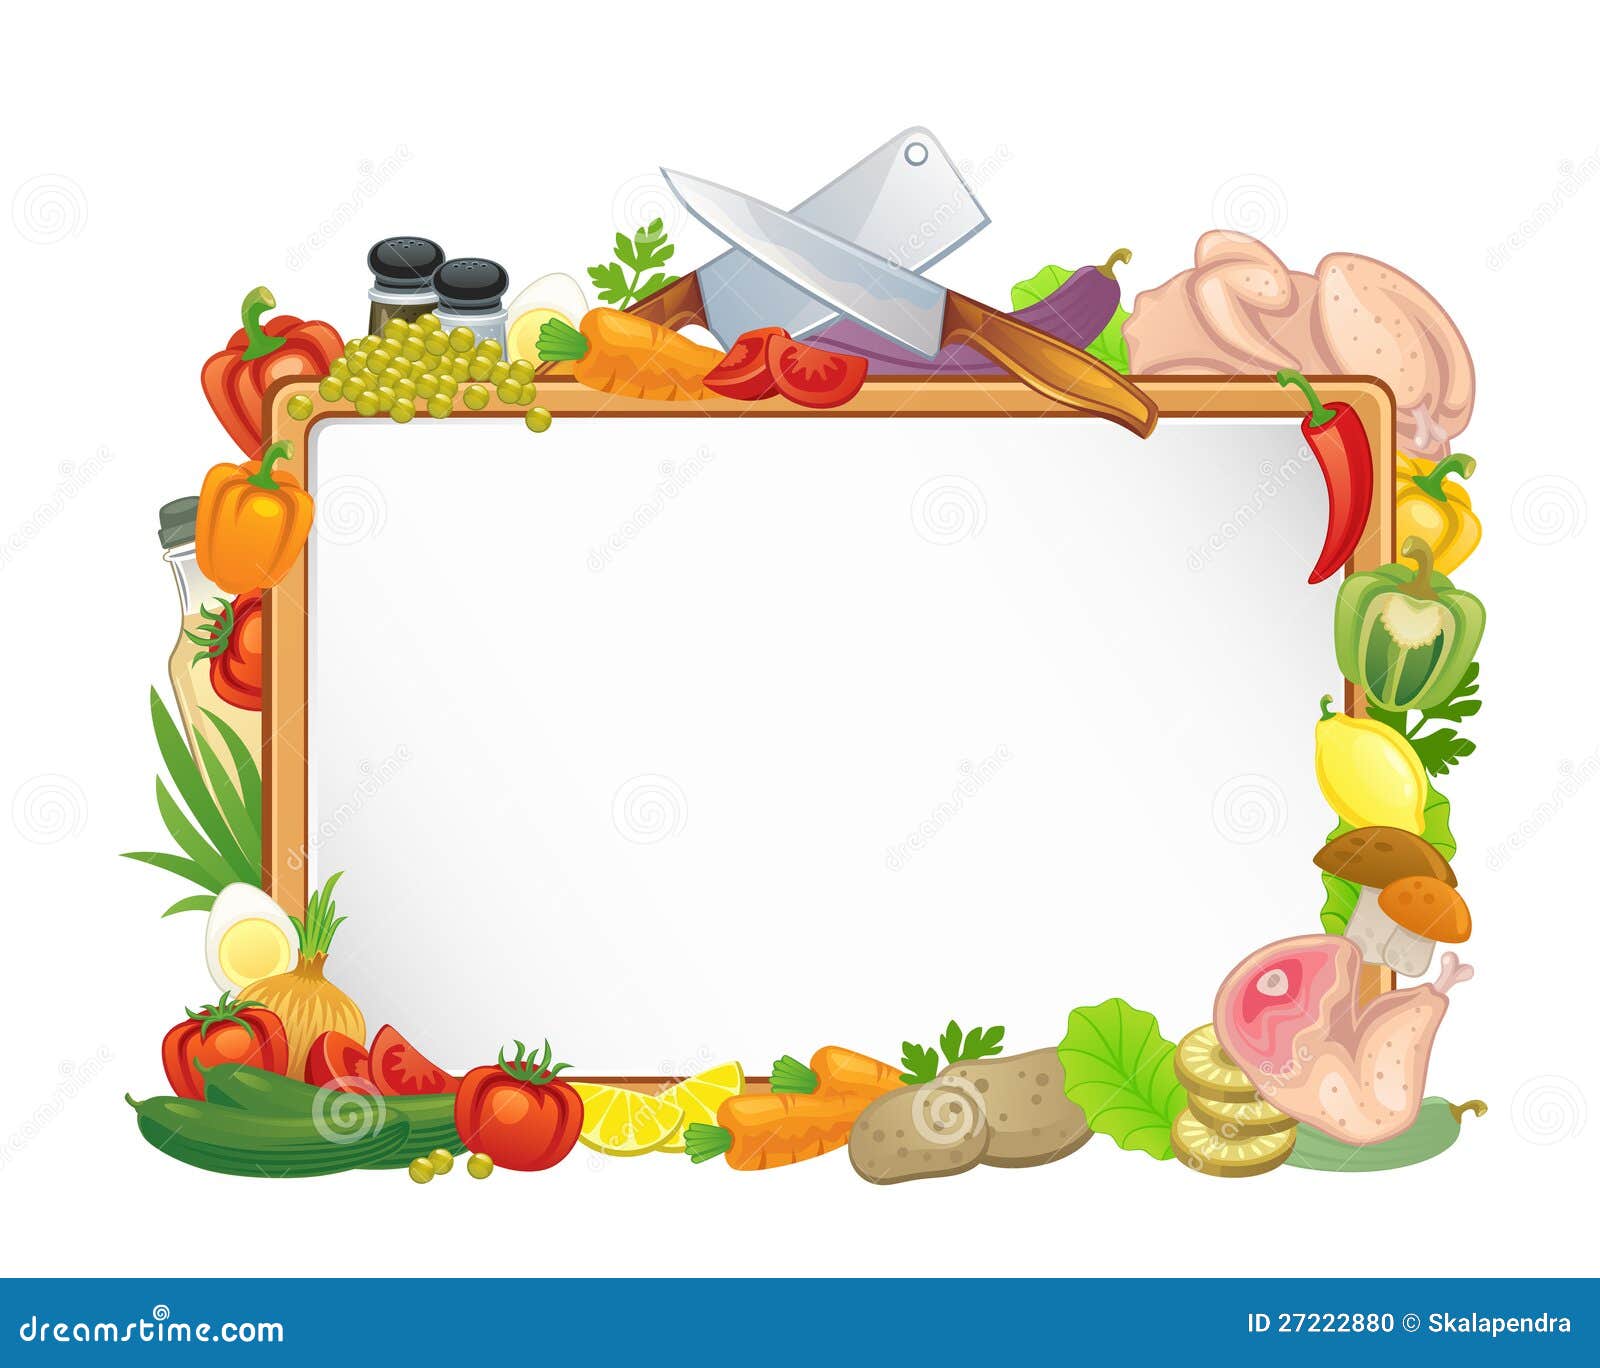 clipart food borders frames - photo #38